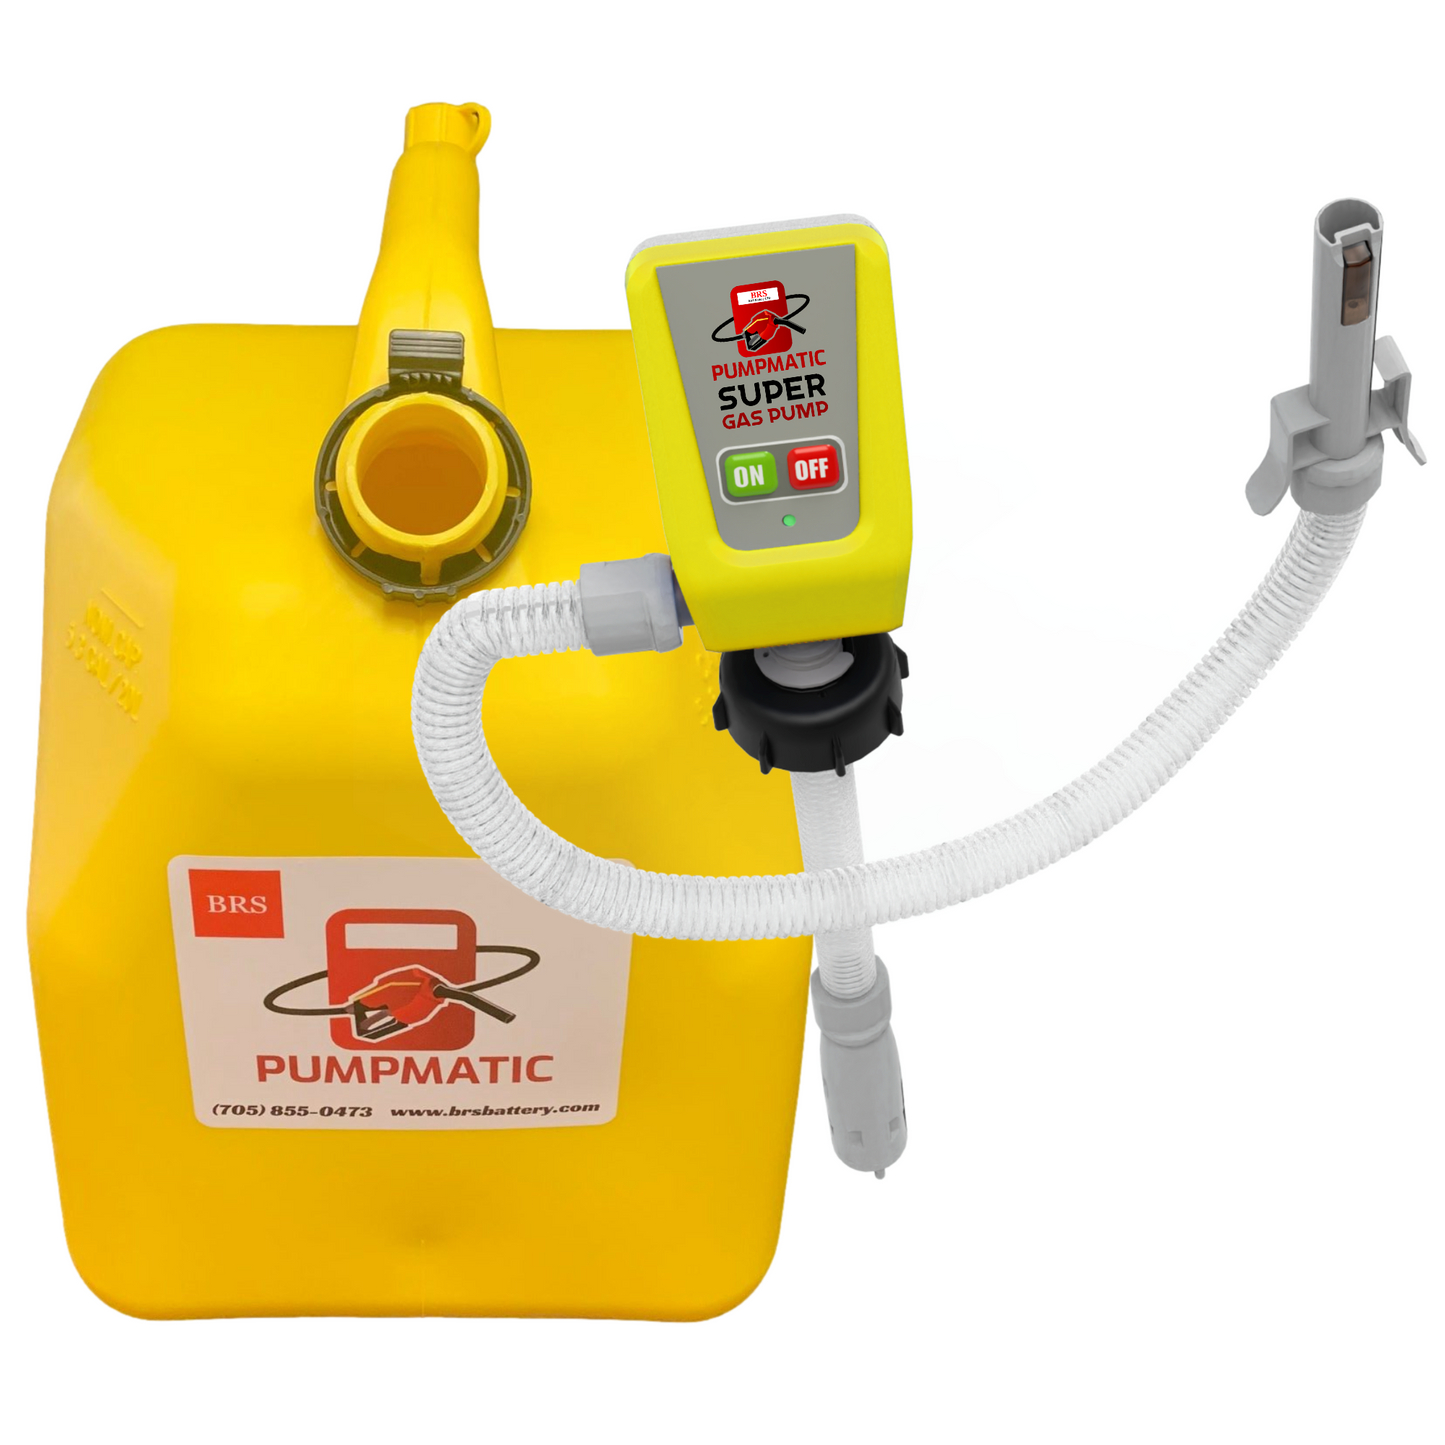 *NEW* PROTOTYPE Yellow Diesel Pump + Diesel Fuel Can Combo Kit -Super Gas Pump for Gas, Diesel, Kerosene, etc.  3 Power Sources w/ Extra Long Hose - BRS Super Pumps